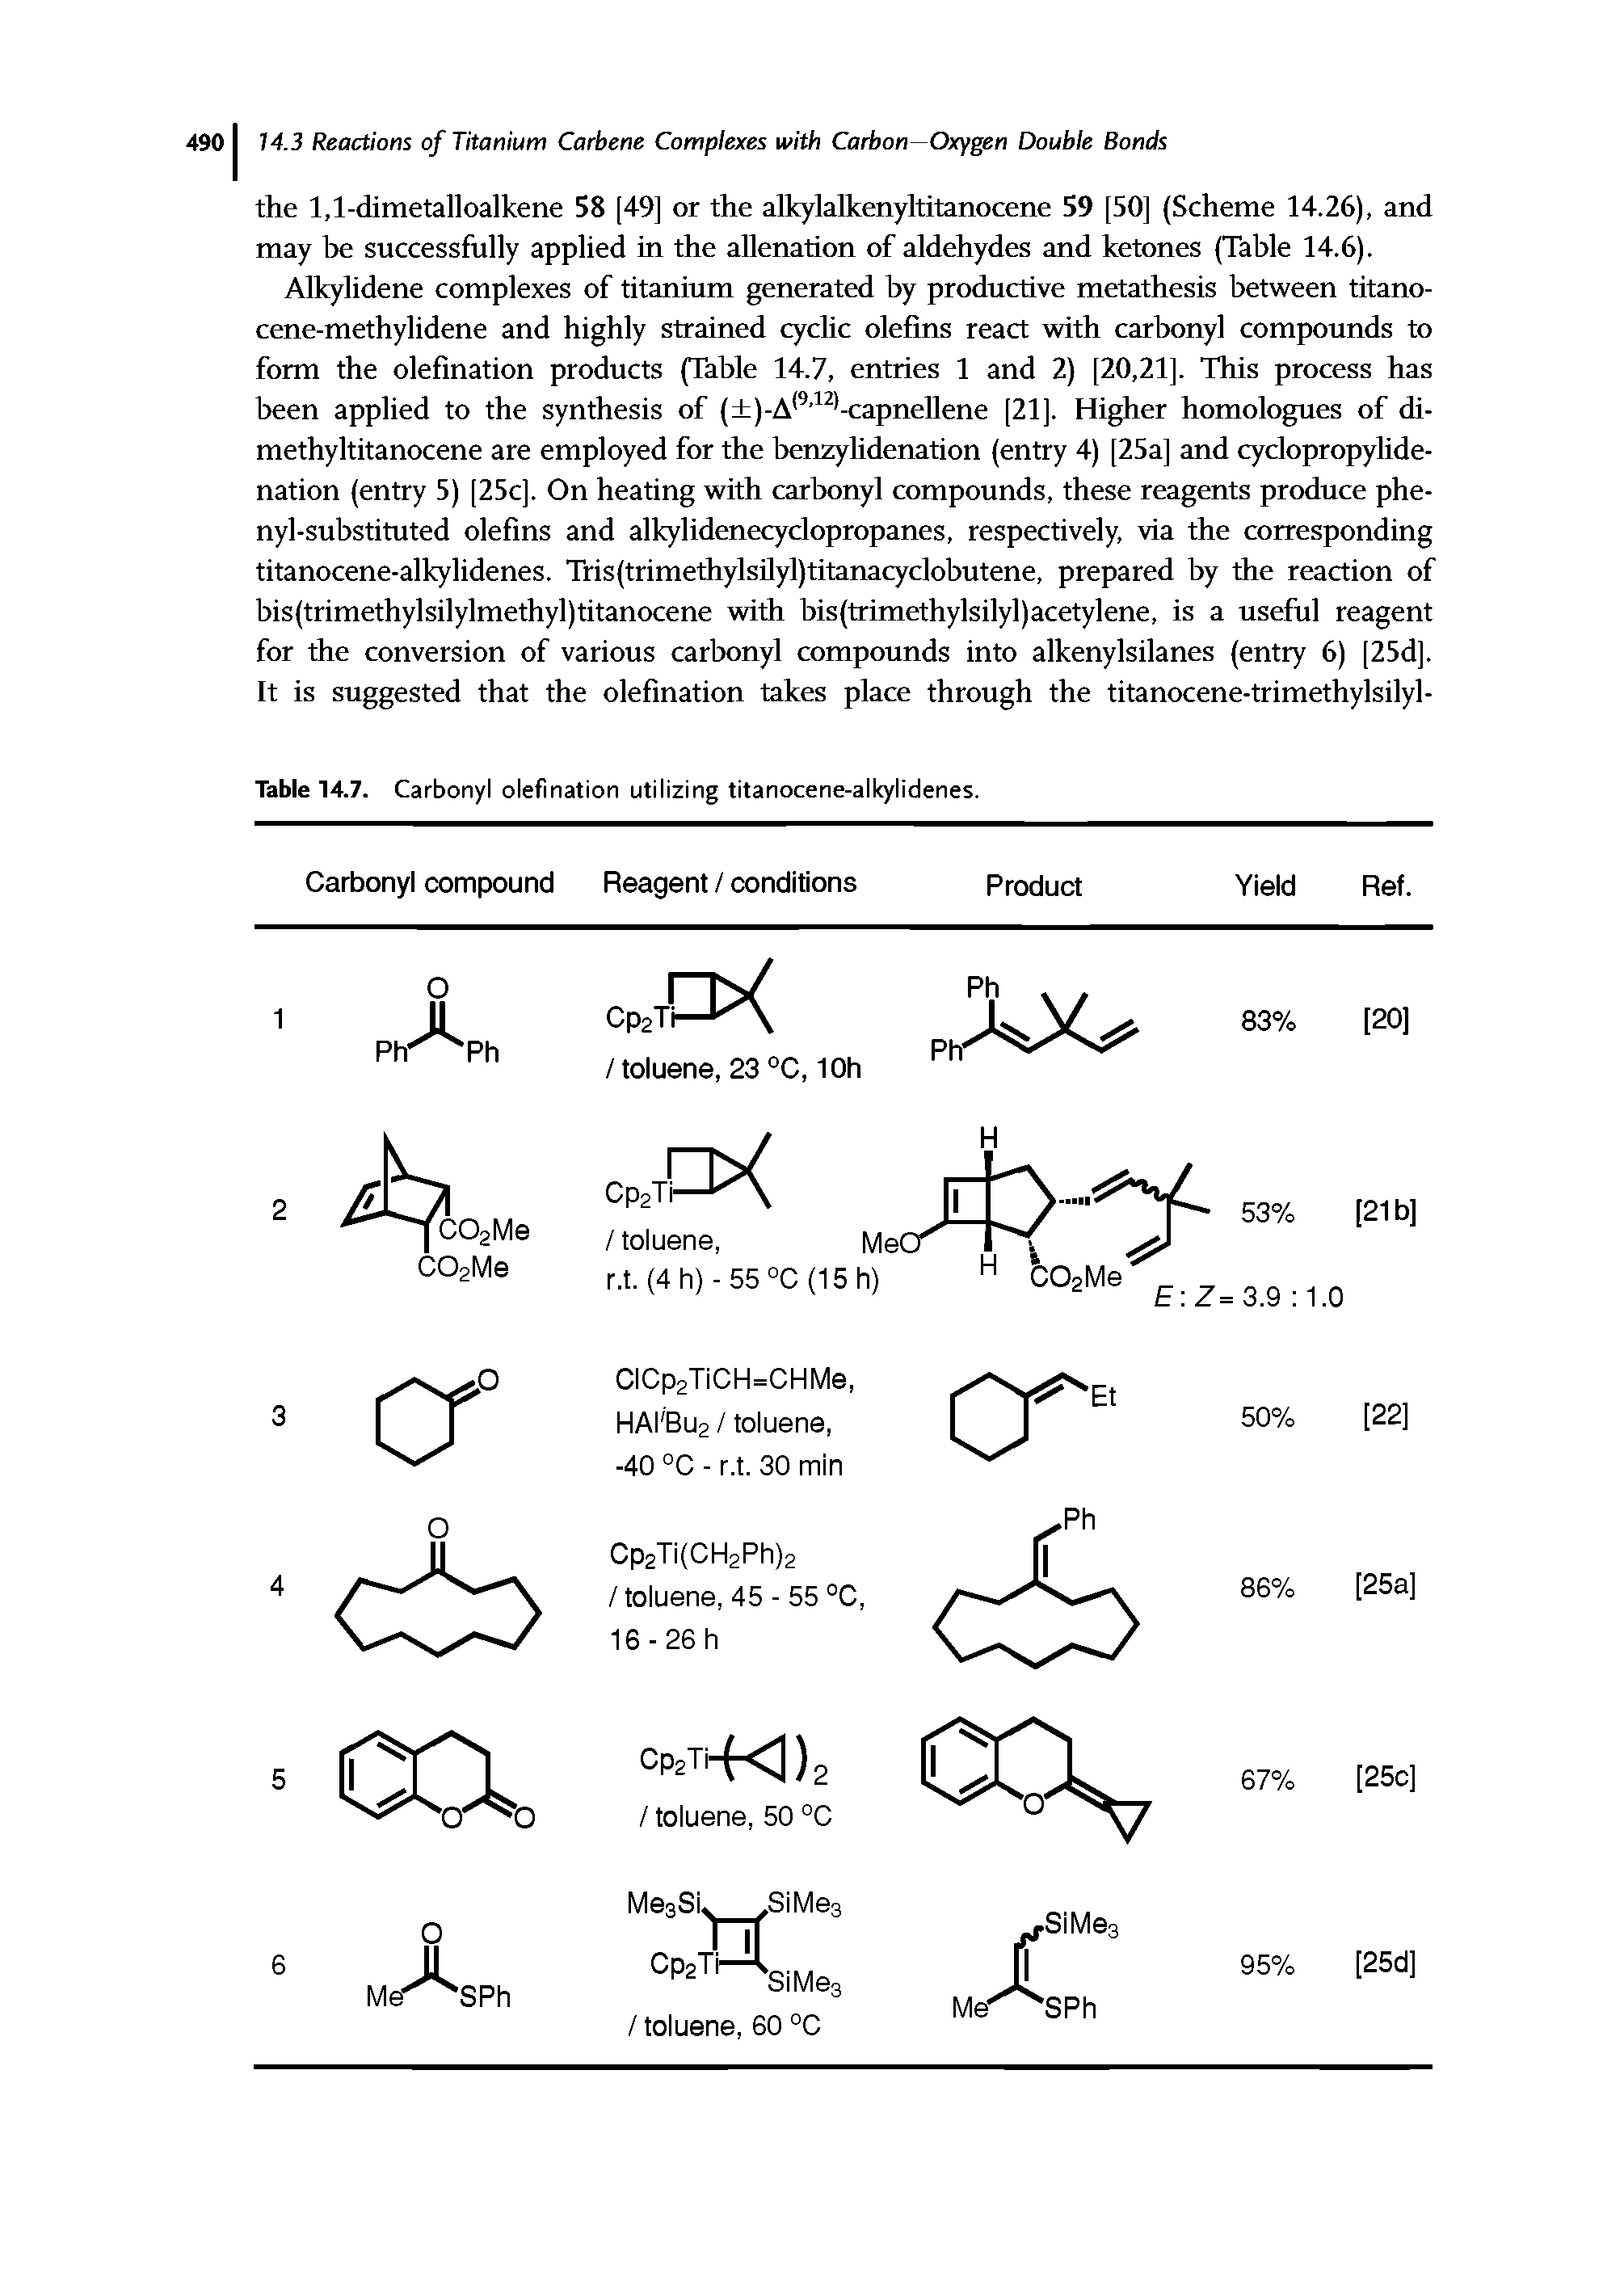 Table 14.7. Carbonyl olefination utilizing titanocene-alkylidenes.